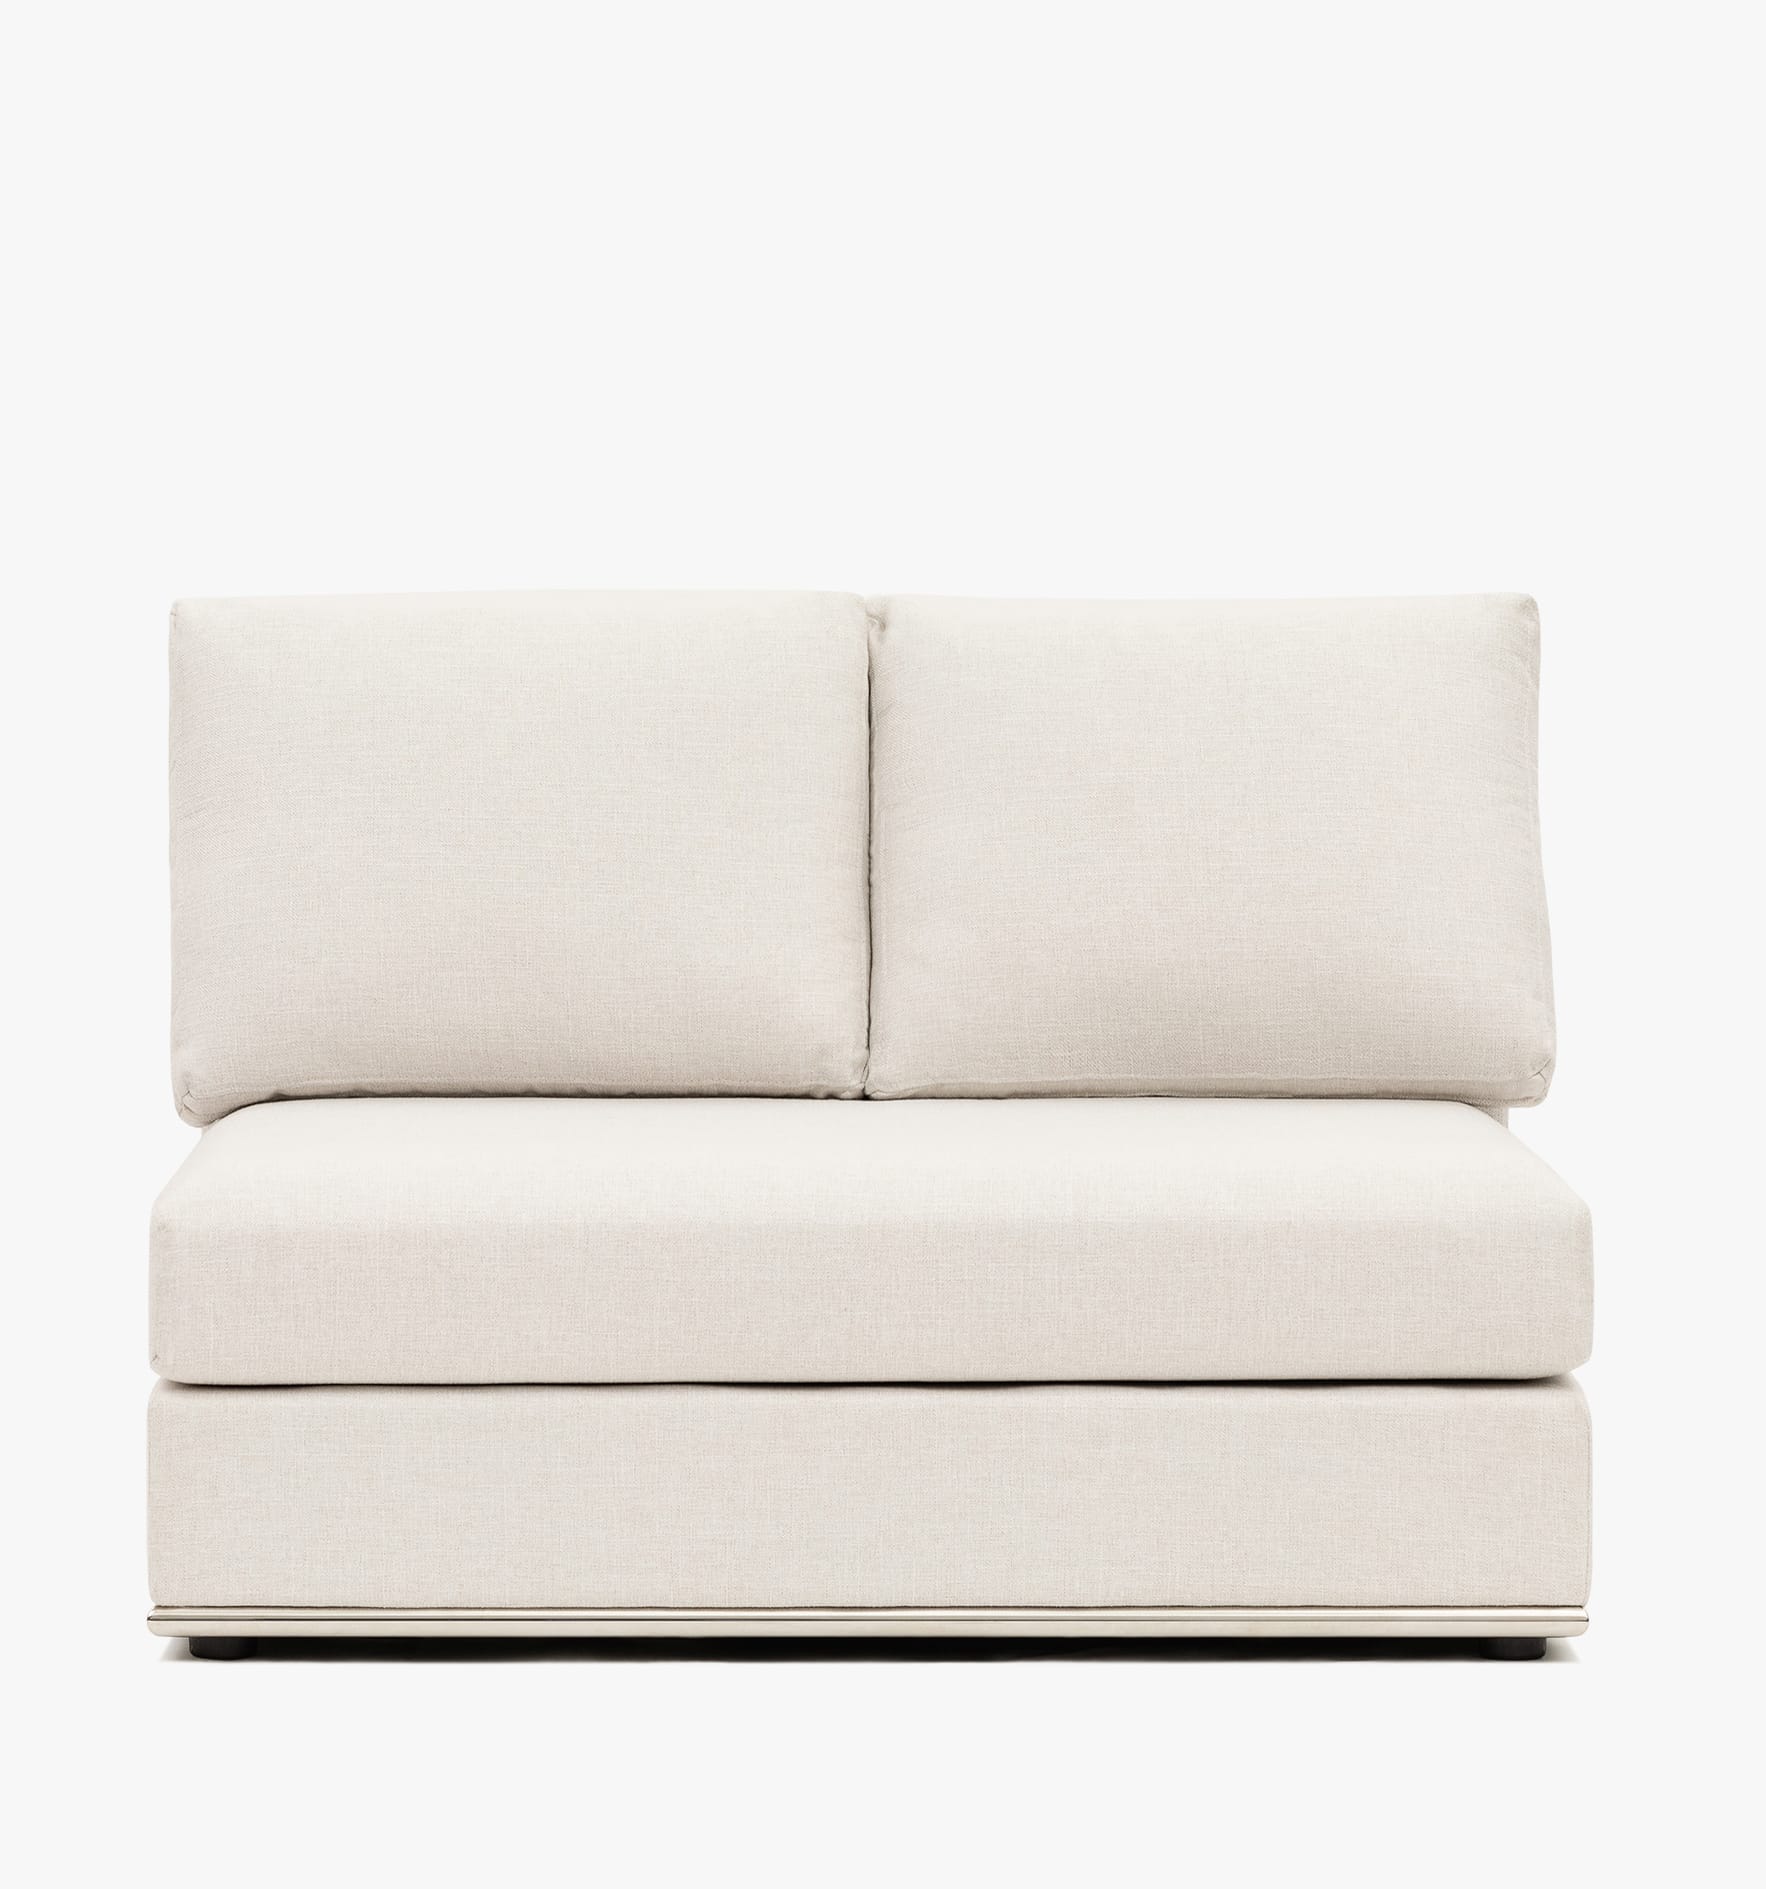 Flow Armless Chair - cream